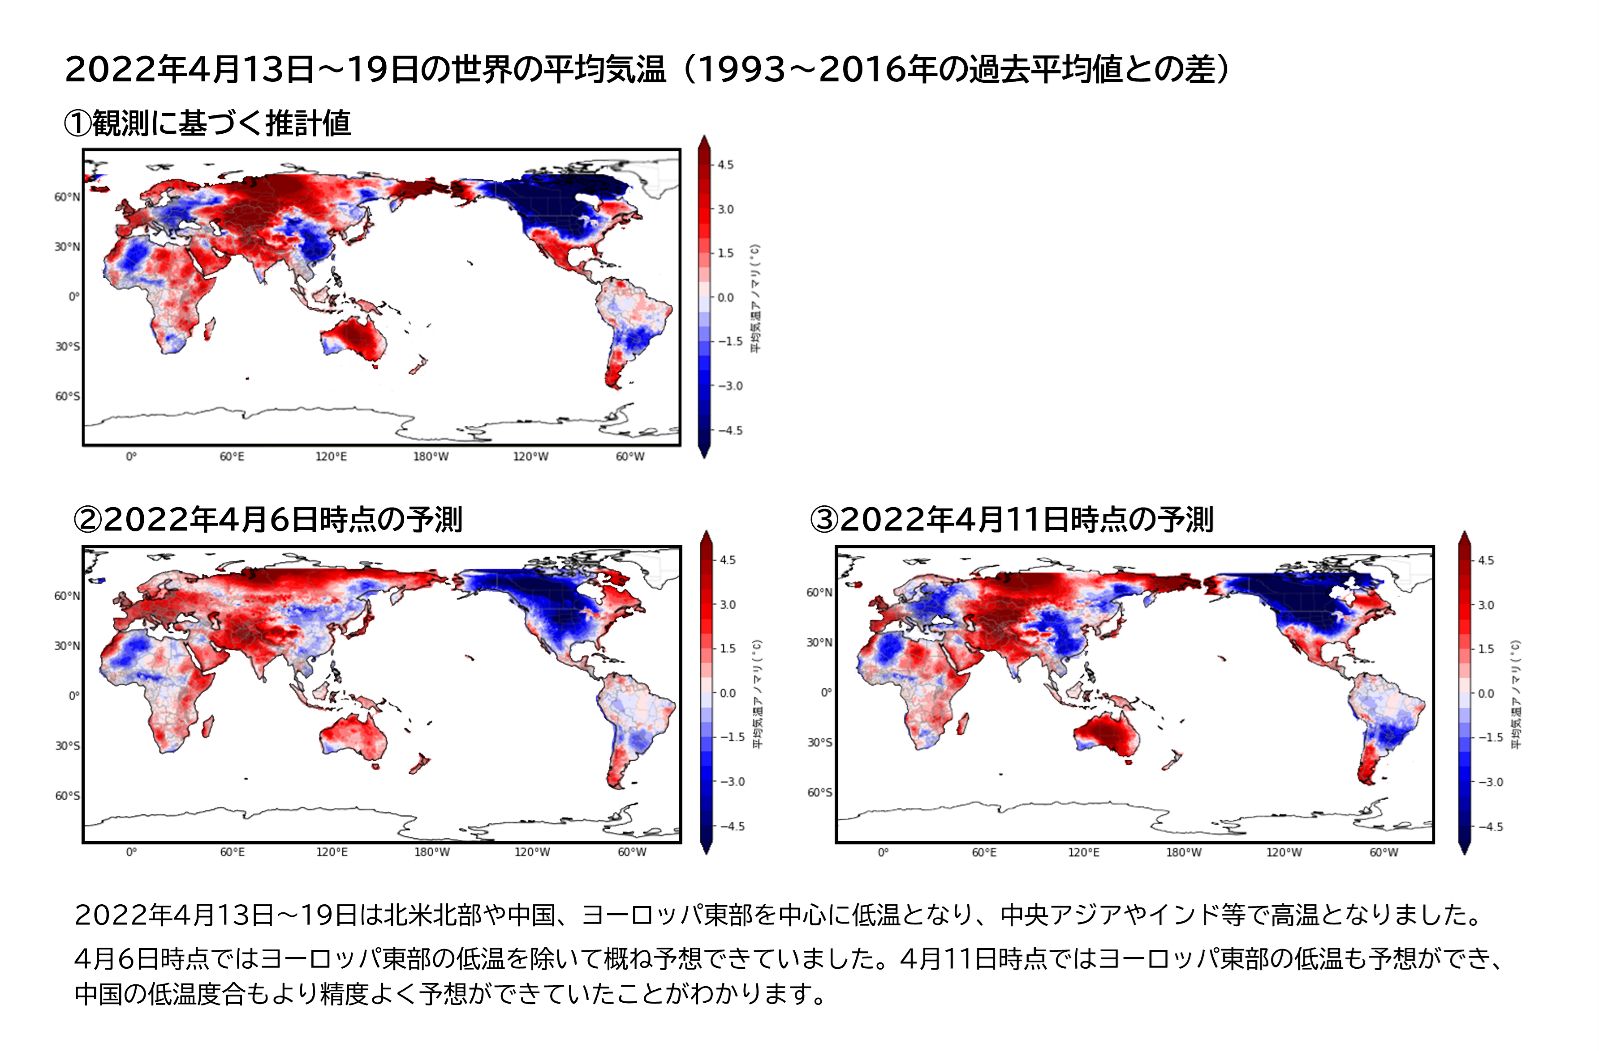 「Weather Data API Global」の予測と観測に基づく推計値の比較